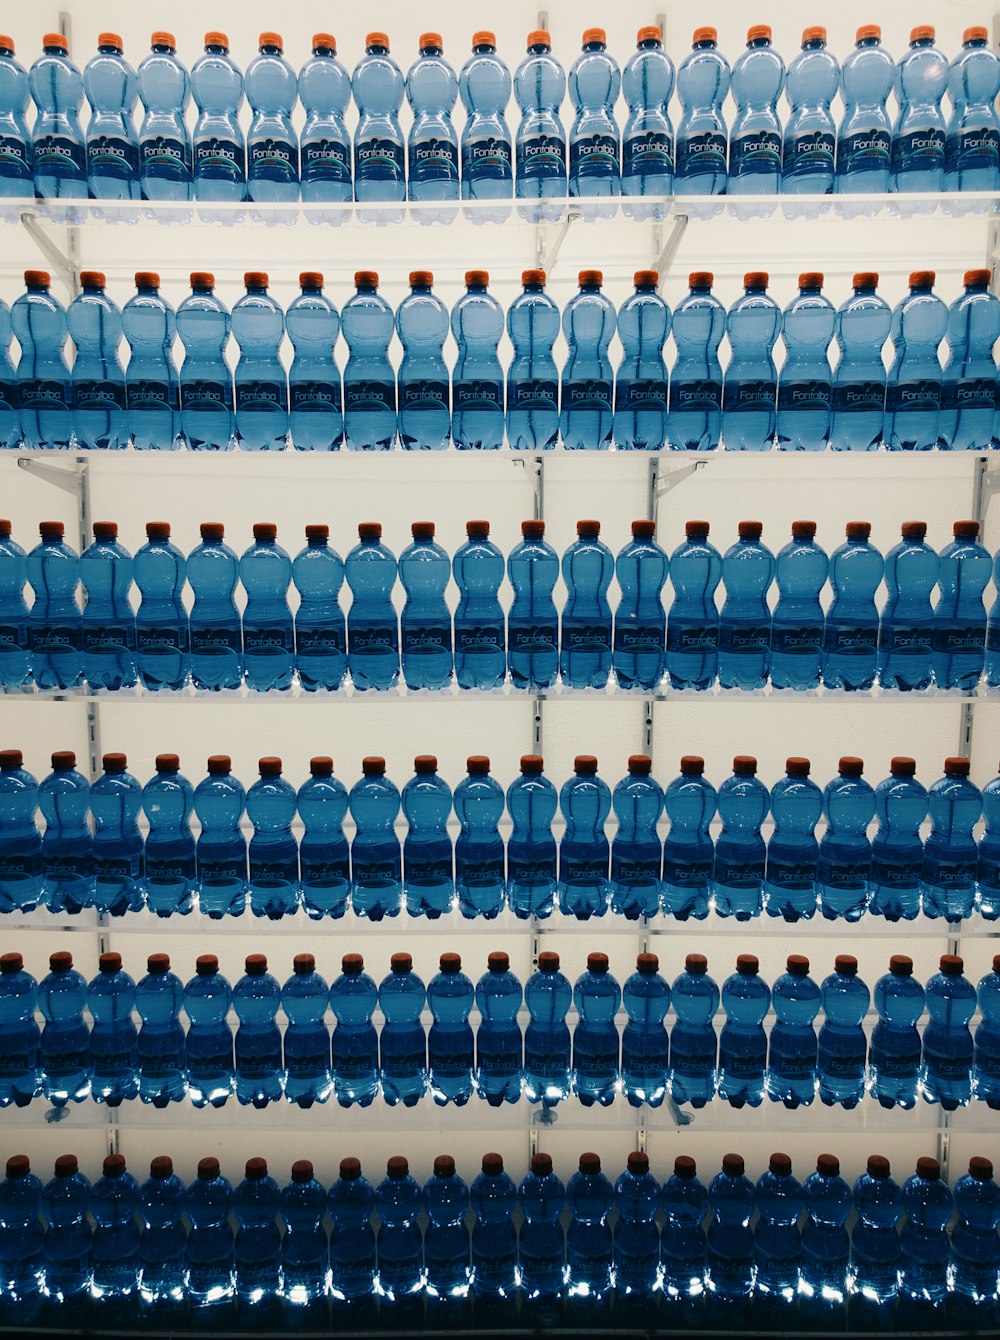 assorted bottled waters on shelf